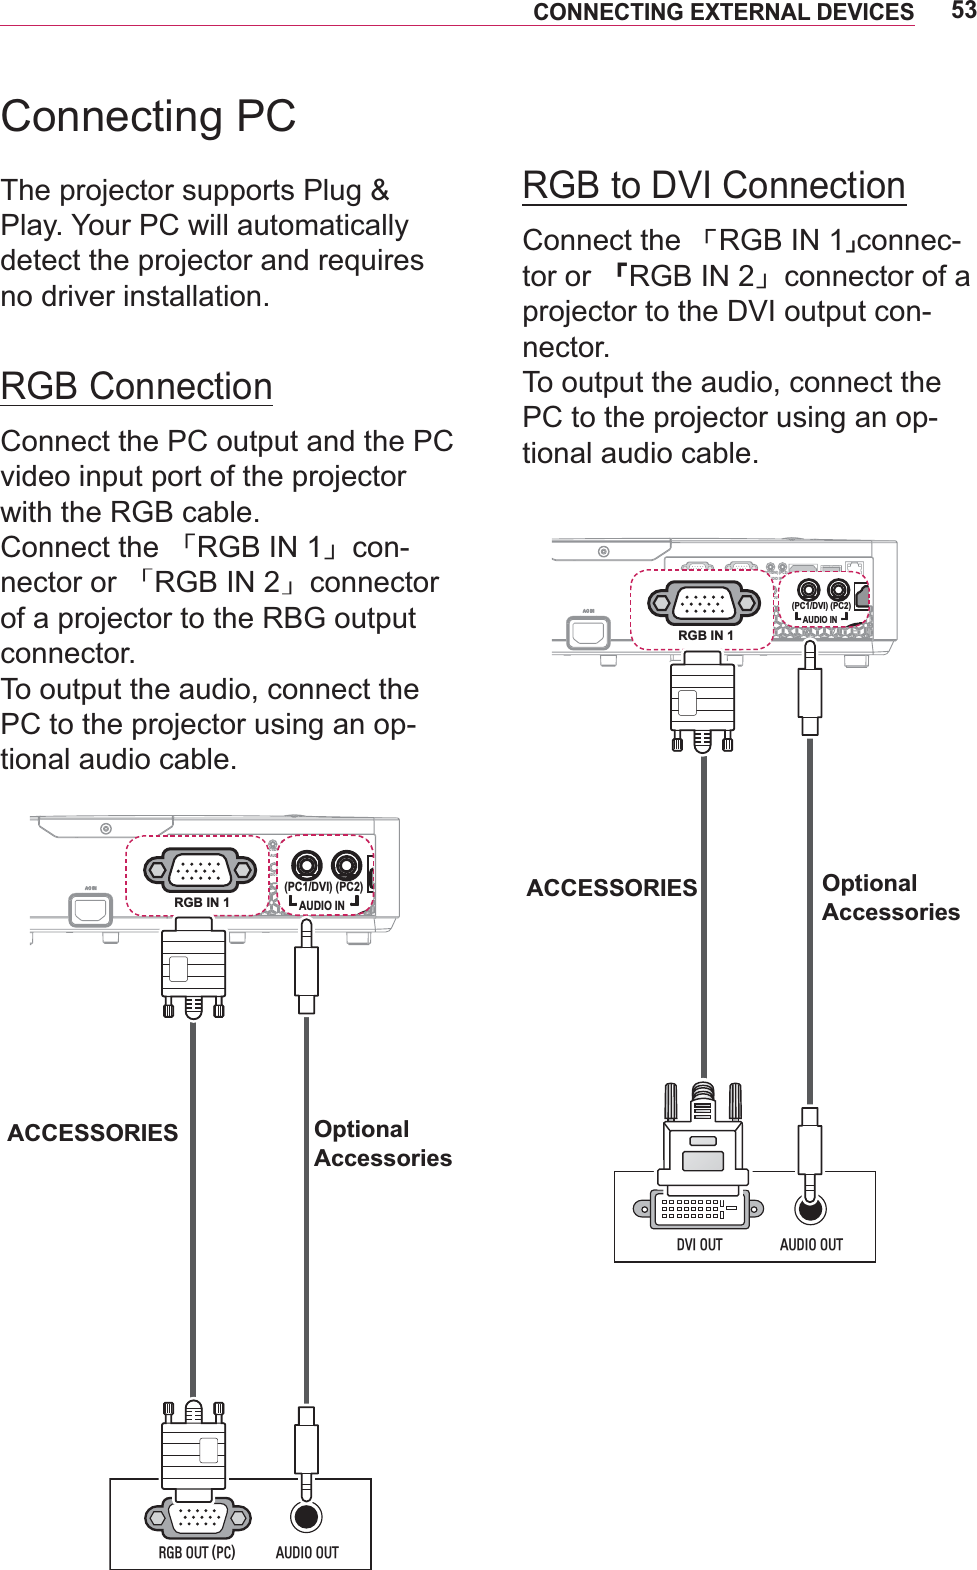 䭽䭾㕑㕒RGB IN 1RGB IN2RGB OUT RS 232CLANUSBAUDIO OUTVIDEOR-AUDIO-L(PC1/DVI) (PC2)AUDIO INHDMI/DVIRGB IN 1$8&apos;,22875*%2873&amp;(PC1/DVI) (PC2)AUDIO INߍI侽䭾:RGB IN1RGB IN2RGB OUT RS 232CLANUSBAUDIO OUTVIDEOR-AUDIO-L(PC1/DVI) (PC2)AUDIO INHDMI/DVI$8&apos;,2287&apos;9,287RGB IN 1(PC1/DVI) (PC2)AUDIO IN